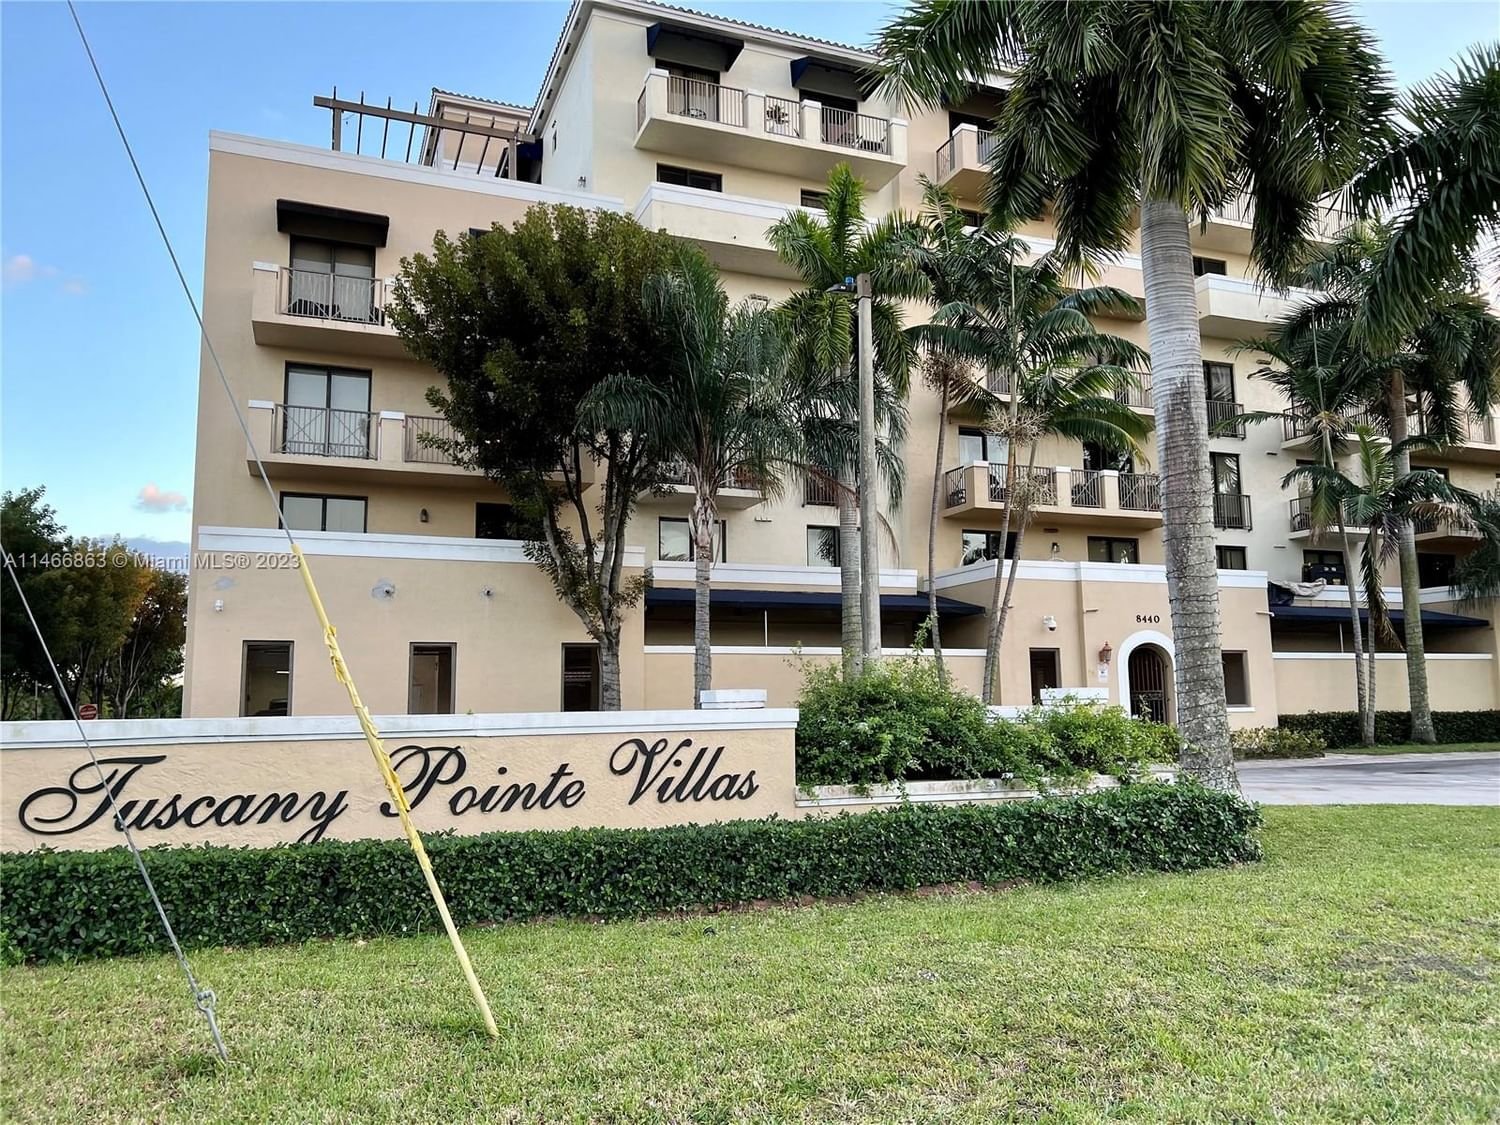 Real estate property located at 8440 8th St #202A, Miami-Dade County, Miami, FL